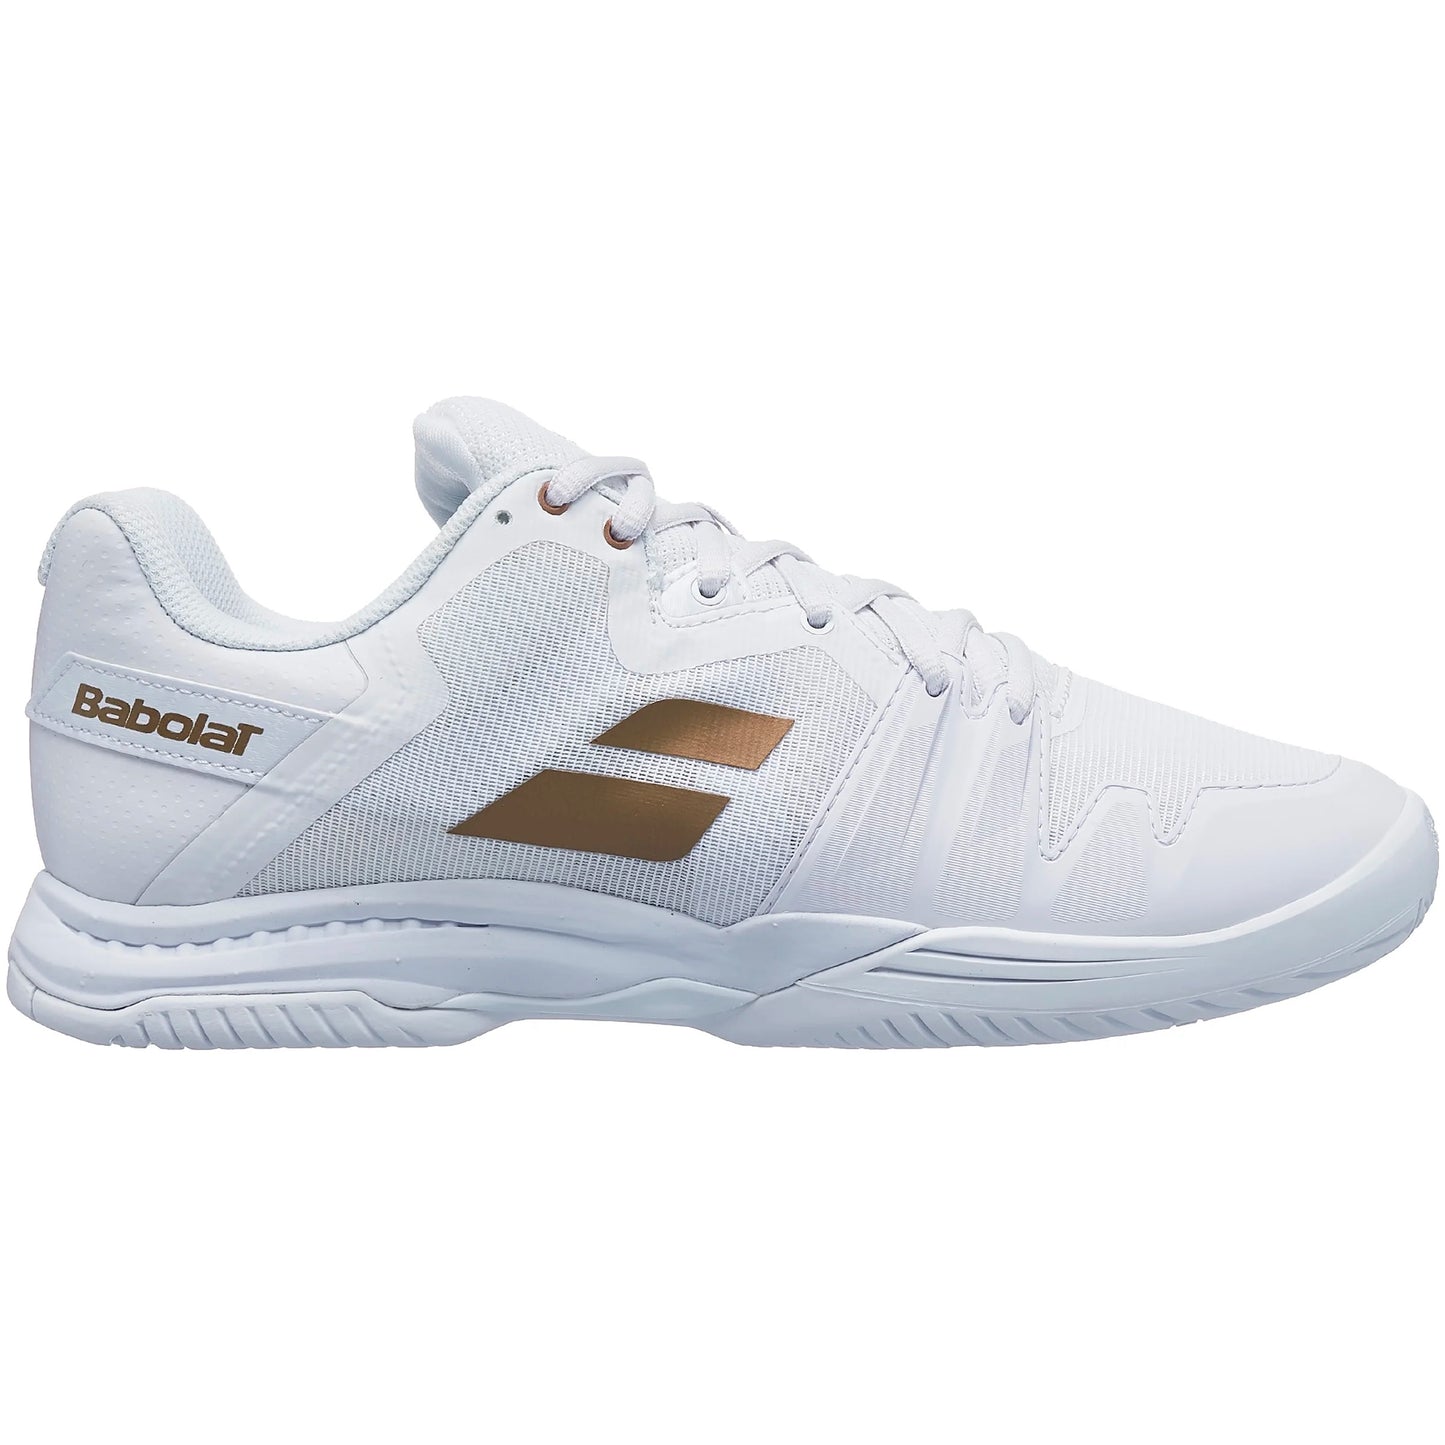 Babolat SFX3 AC Wimbledon men tennis shoes - White/Gold